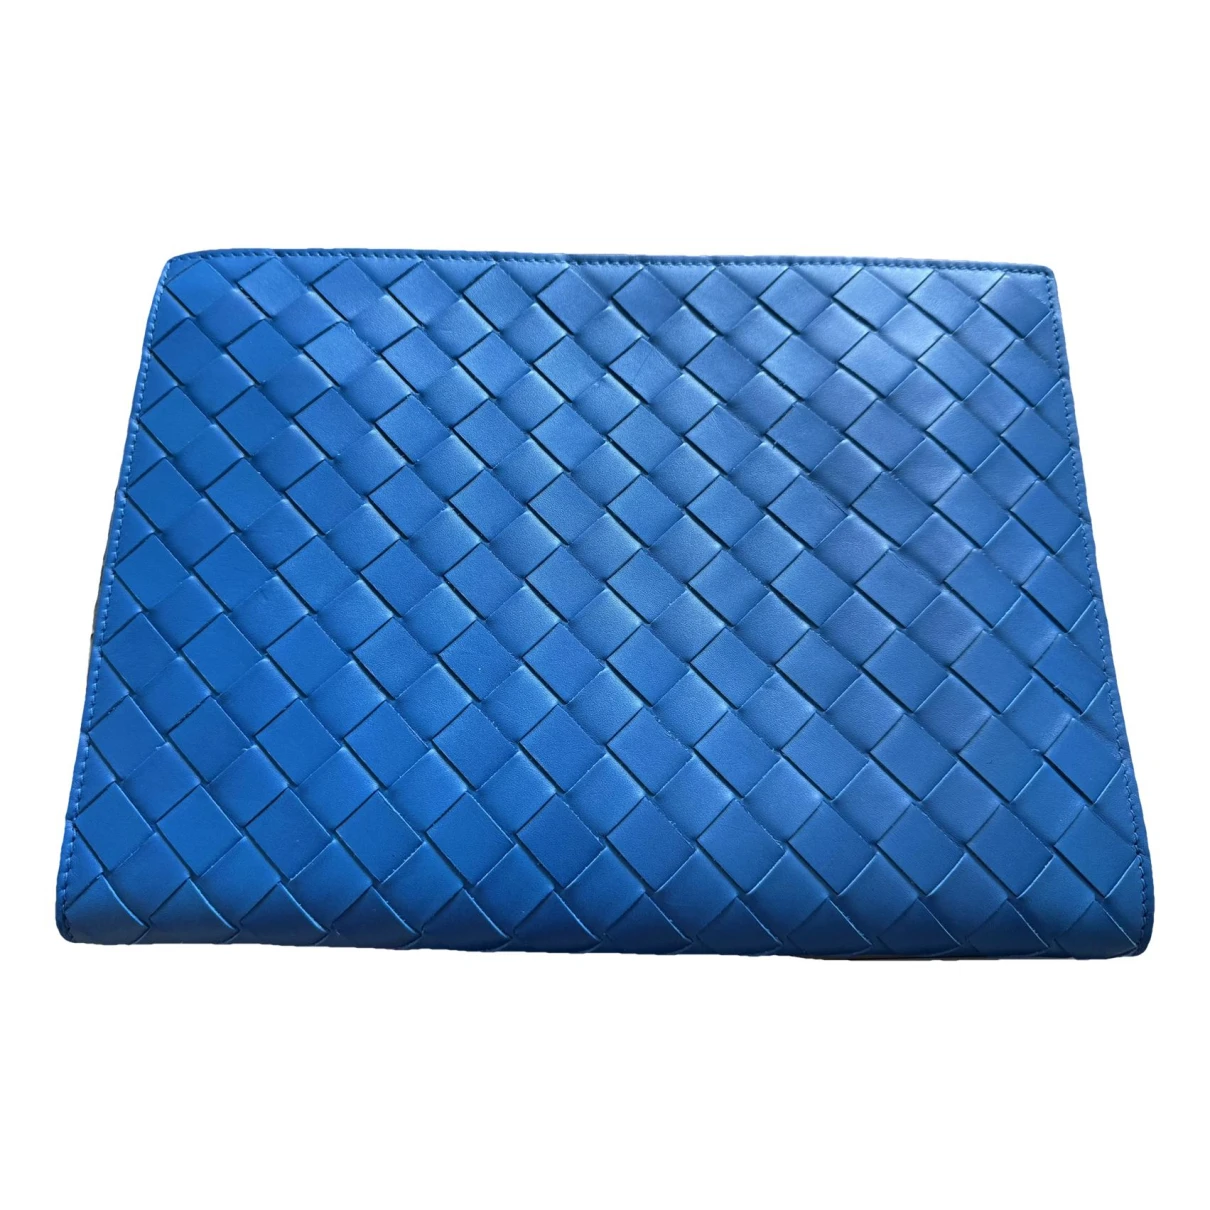 Pre-owned Bottega Veneta Leather Small Bag In Blue